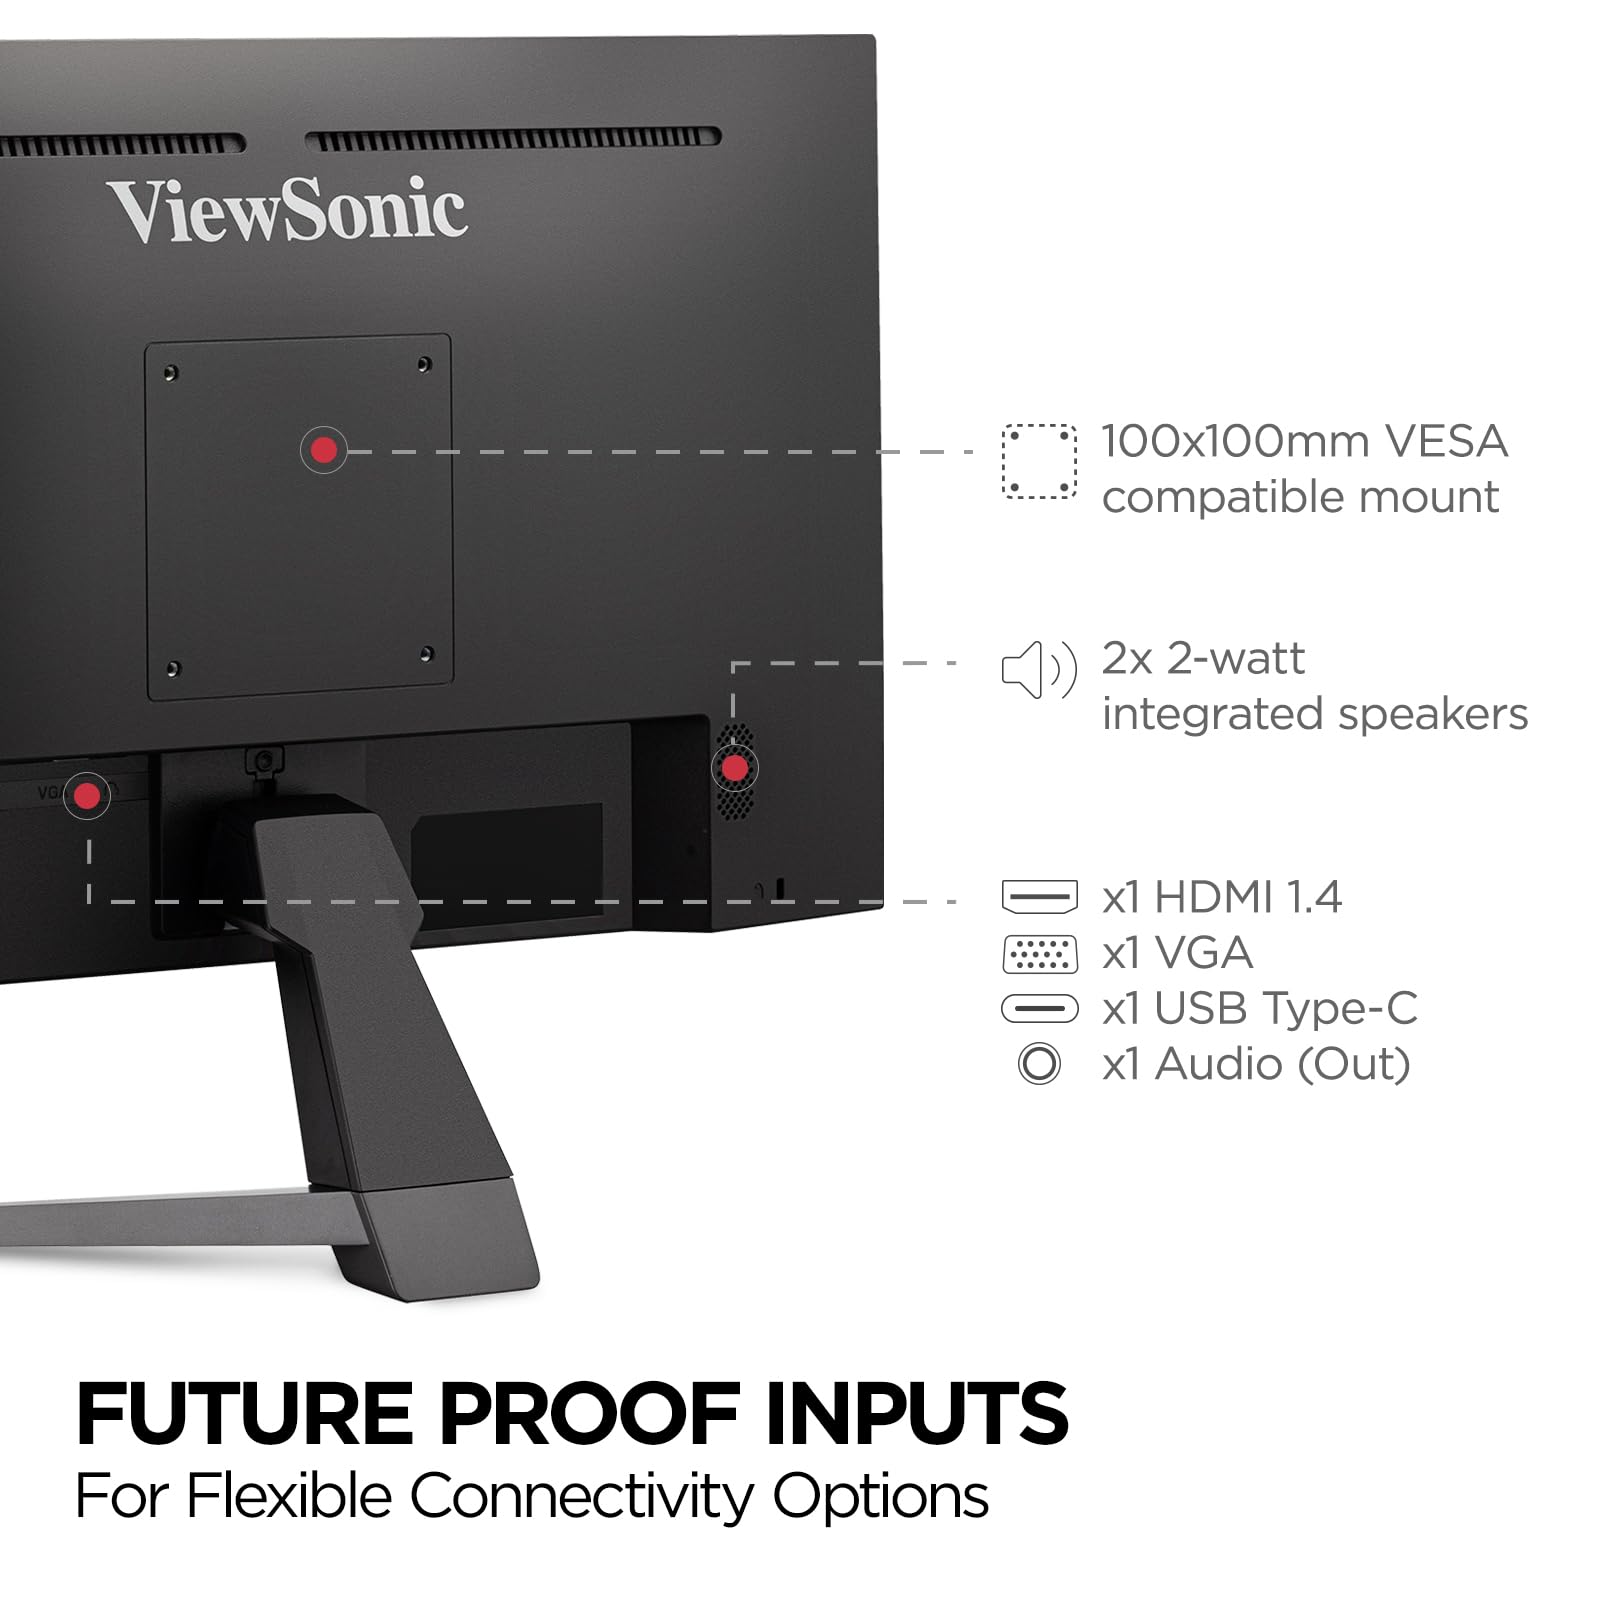 ViewSonic VX2467U 24 Inch 1080p Gaming Monitor with 65W USB C, Ultra-Thin Bezels, HDMI, and VGA Inputs,Black